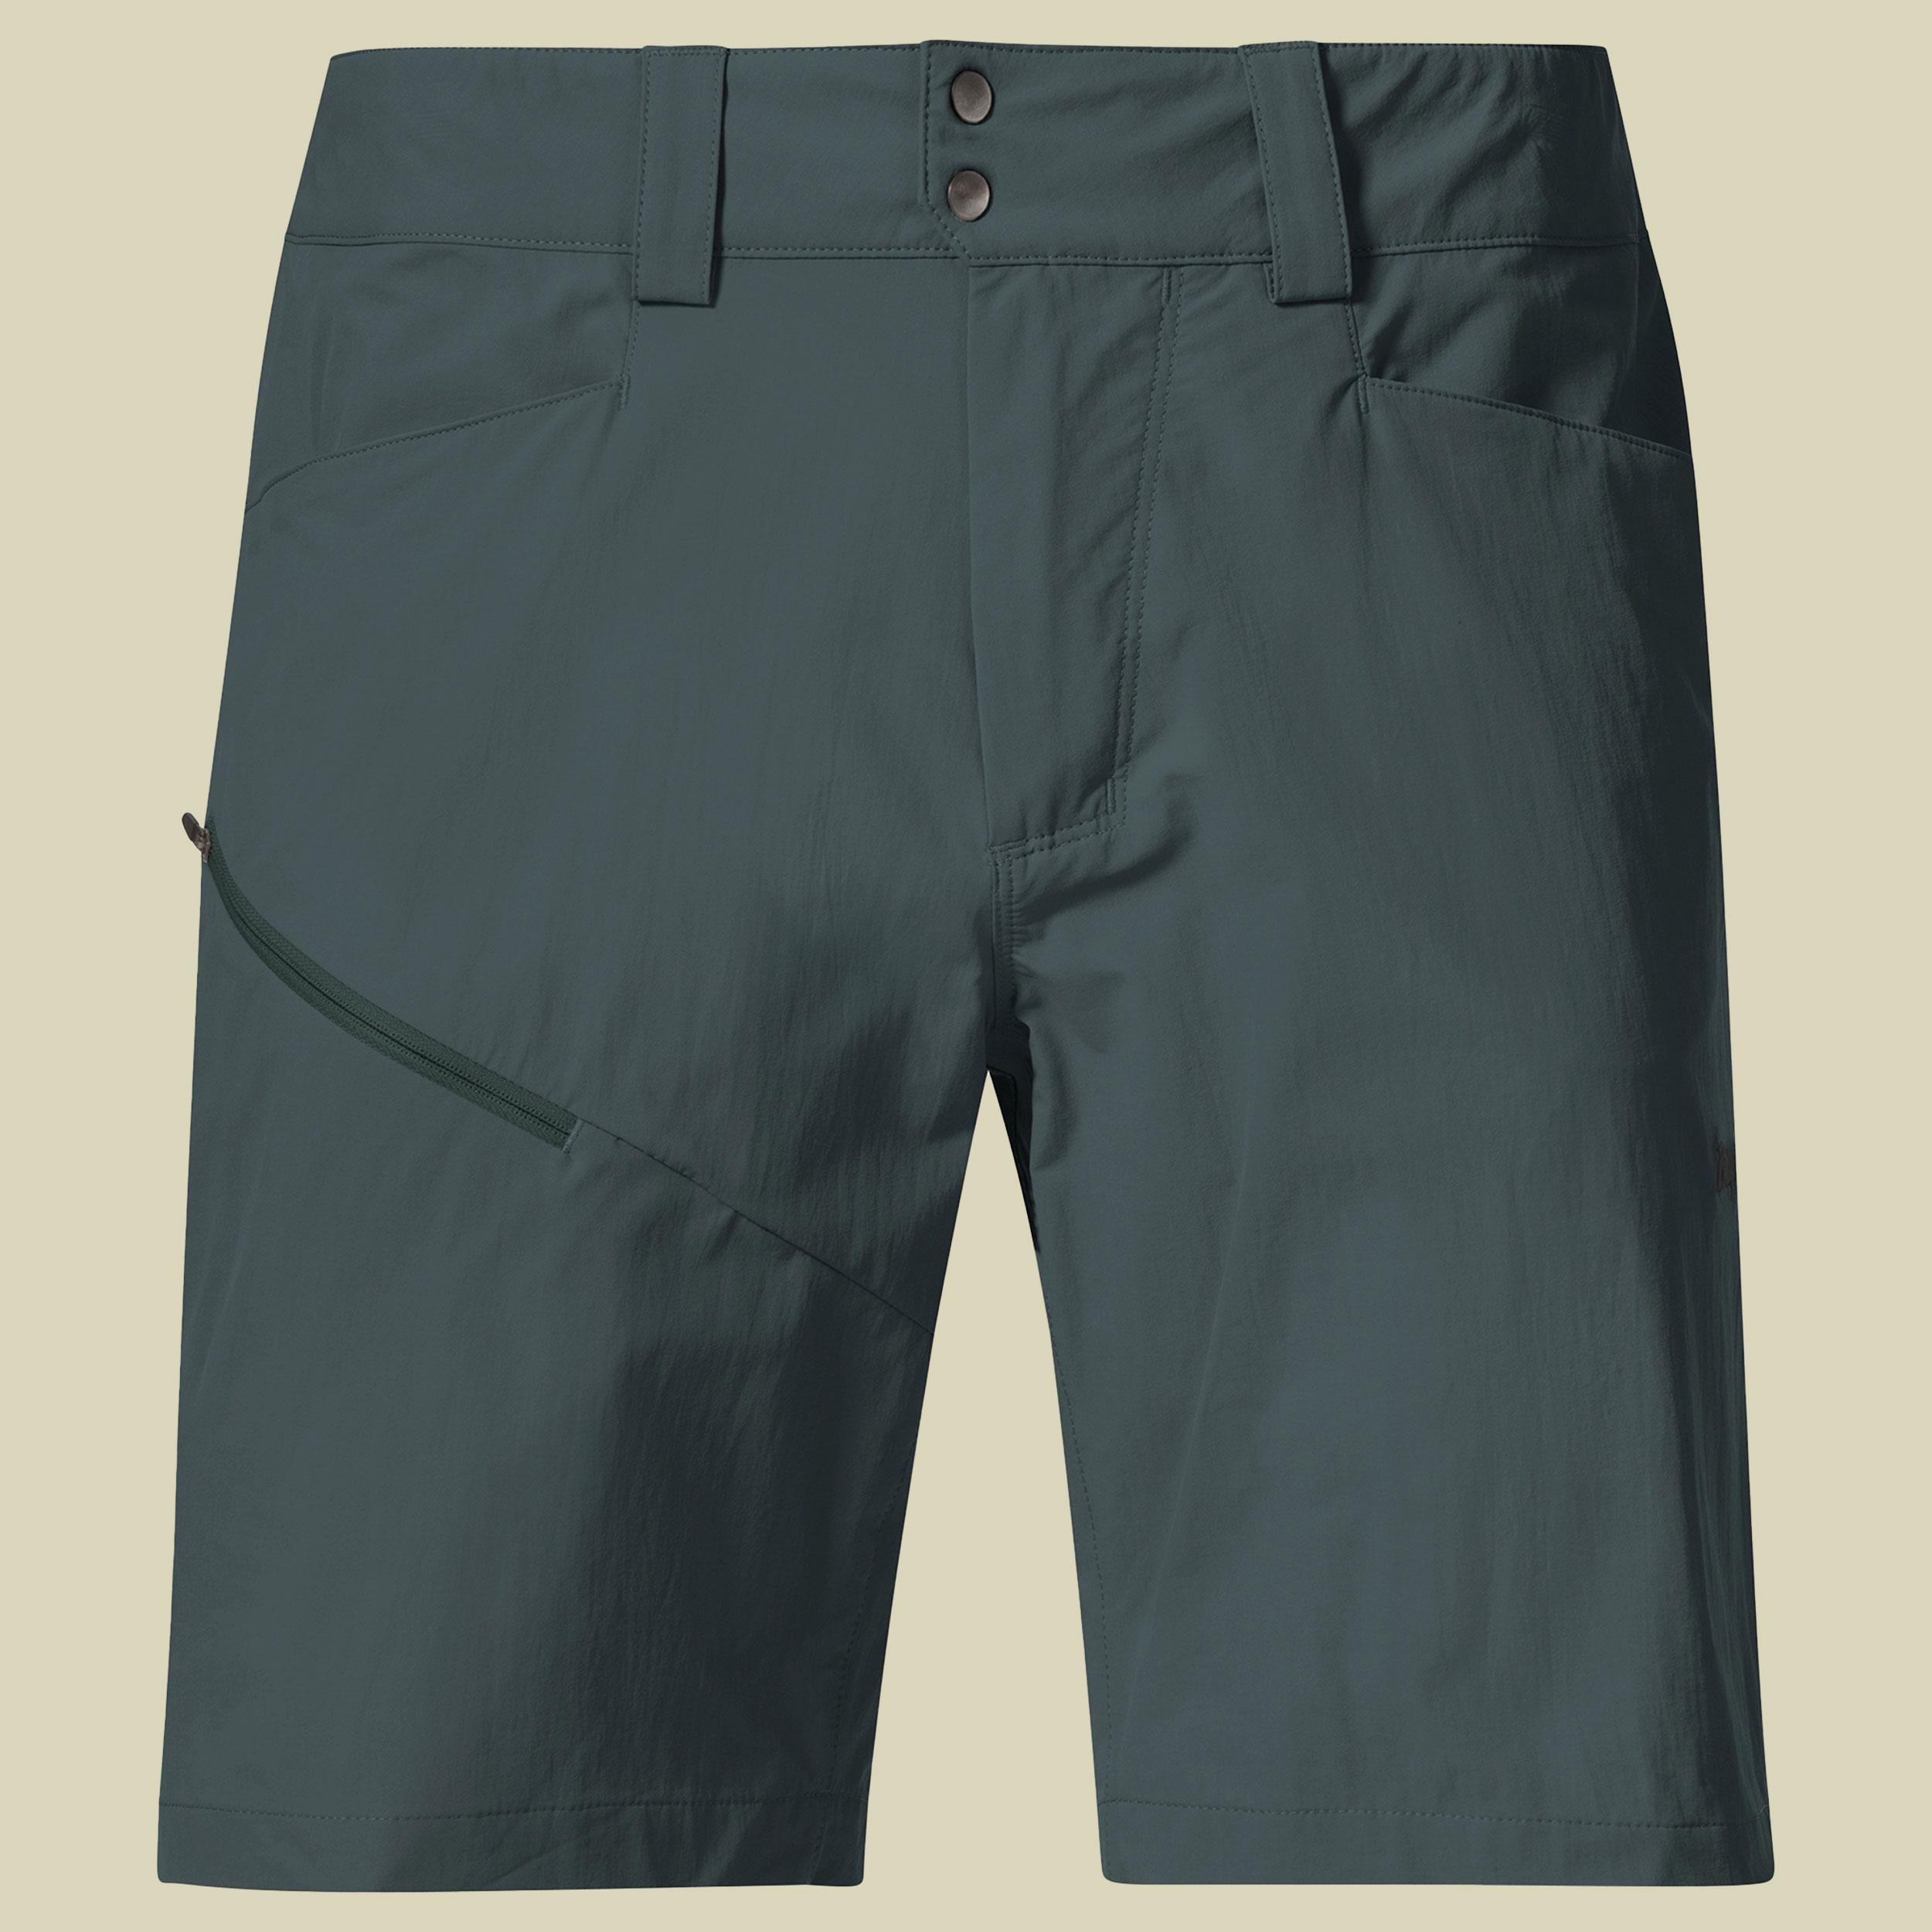 Rabot Light Softshell Shorts Men Größe 52 Farbe duke green